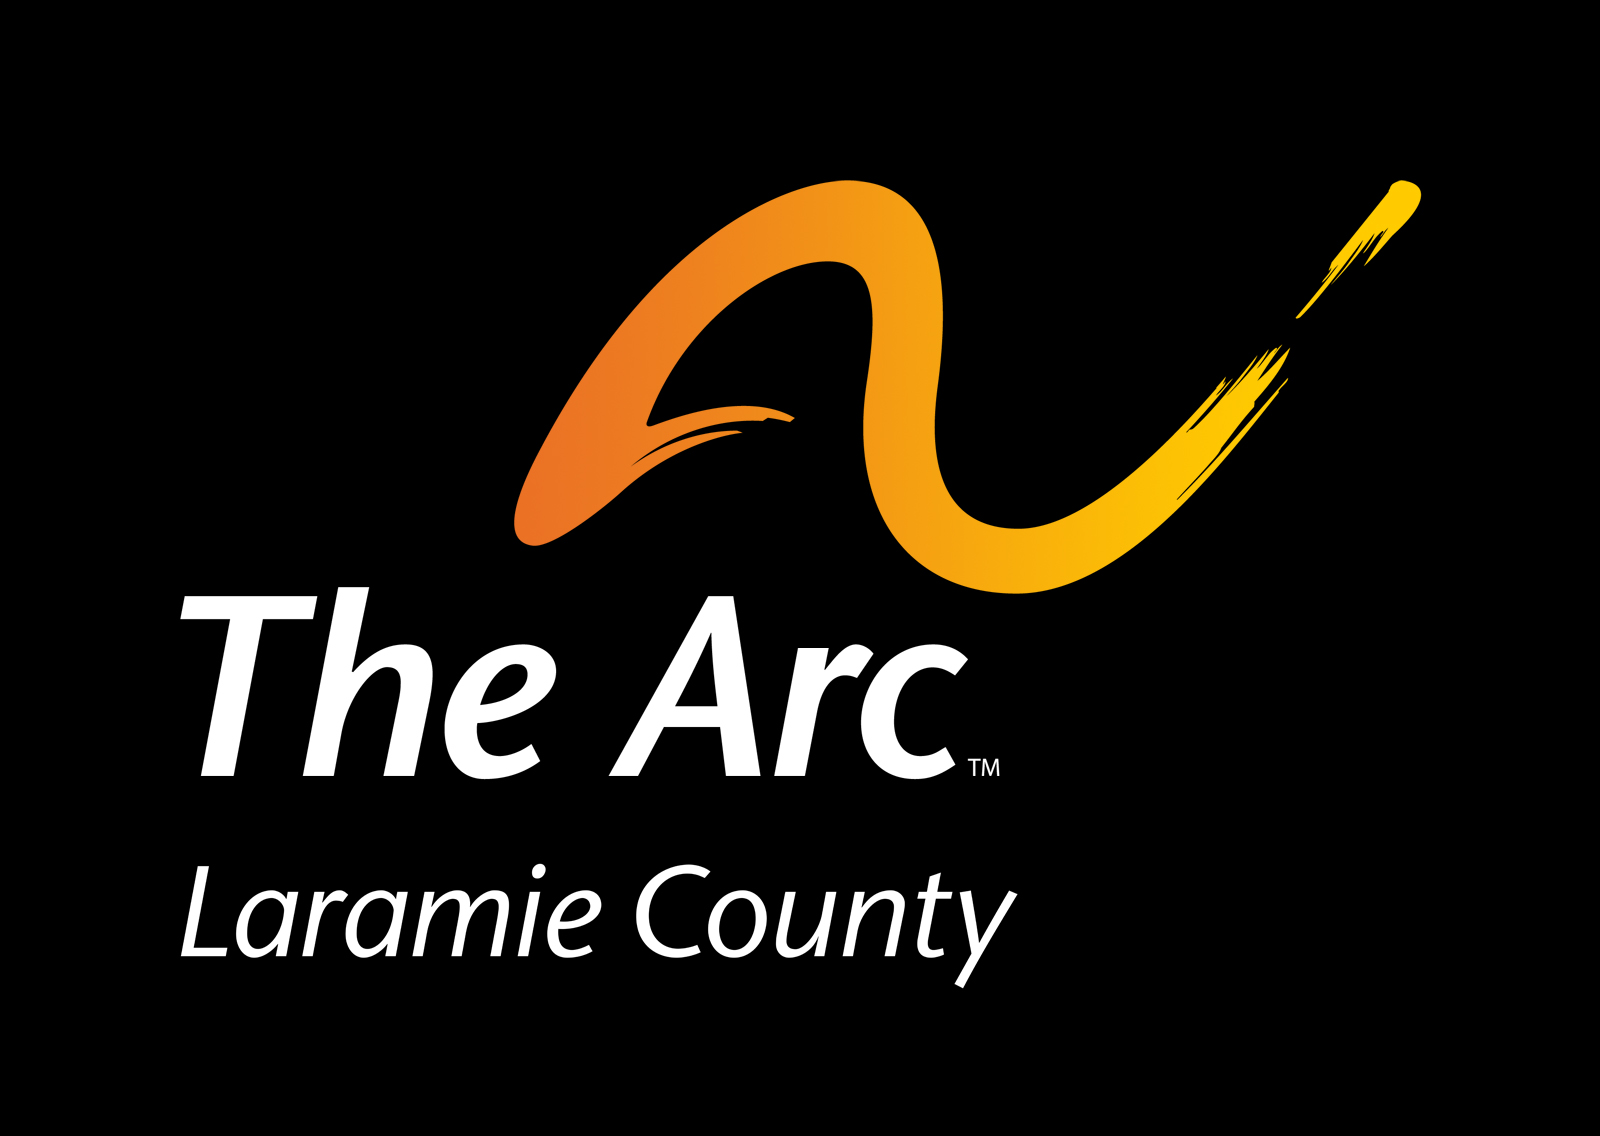 The Arc of Laramie County